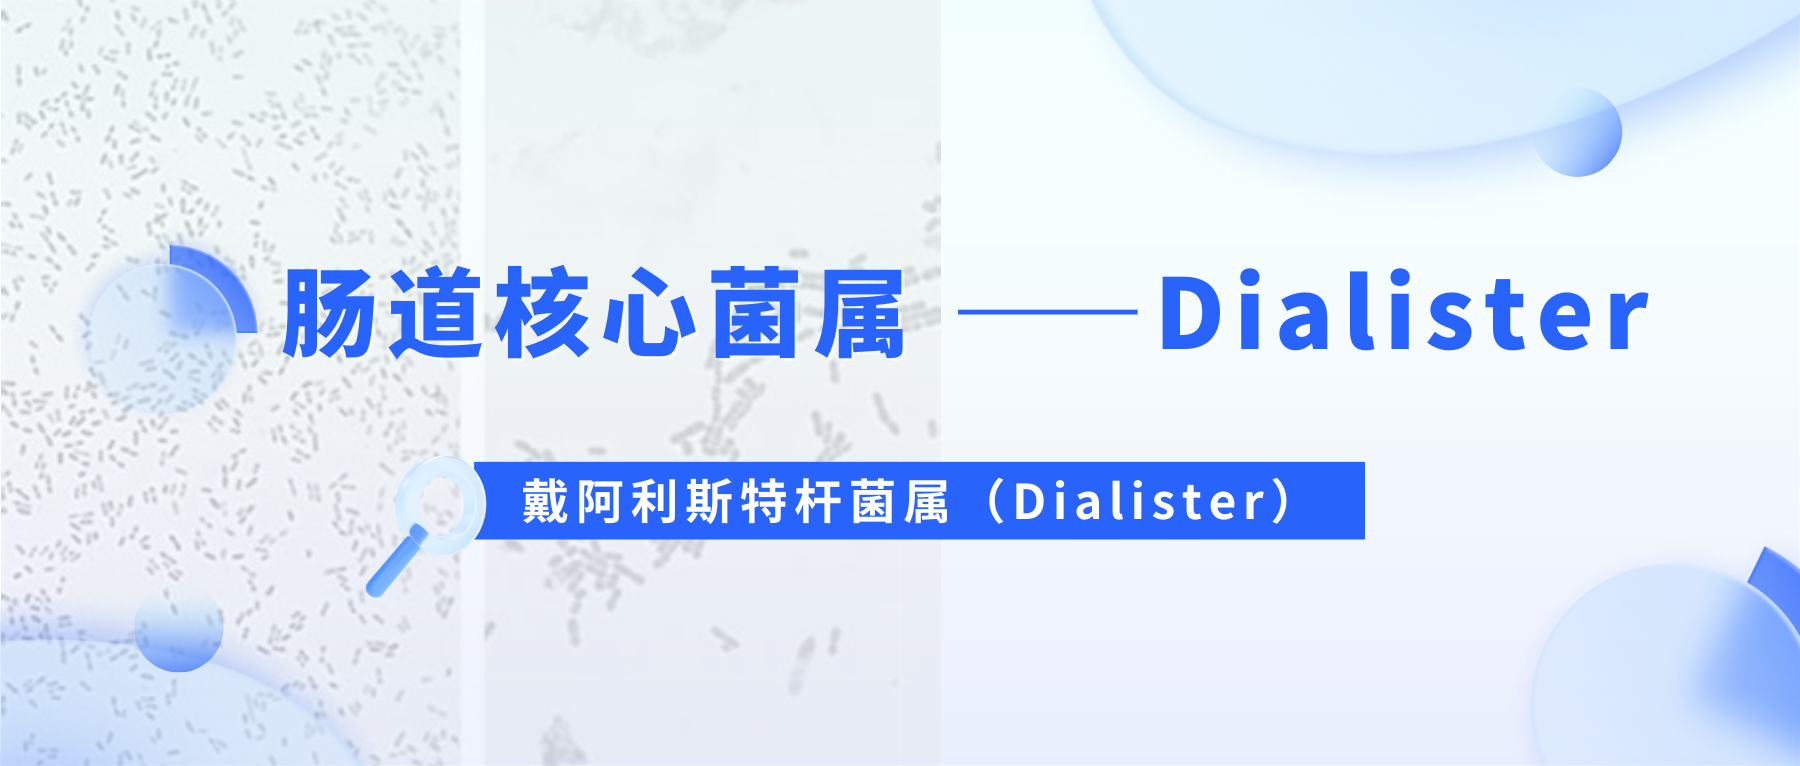 ˹ظ˾ Dialister.png